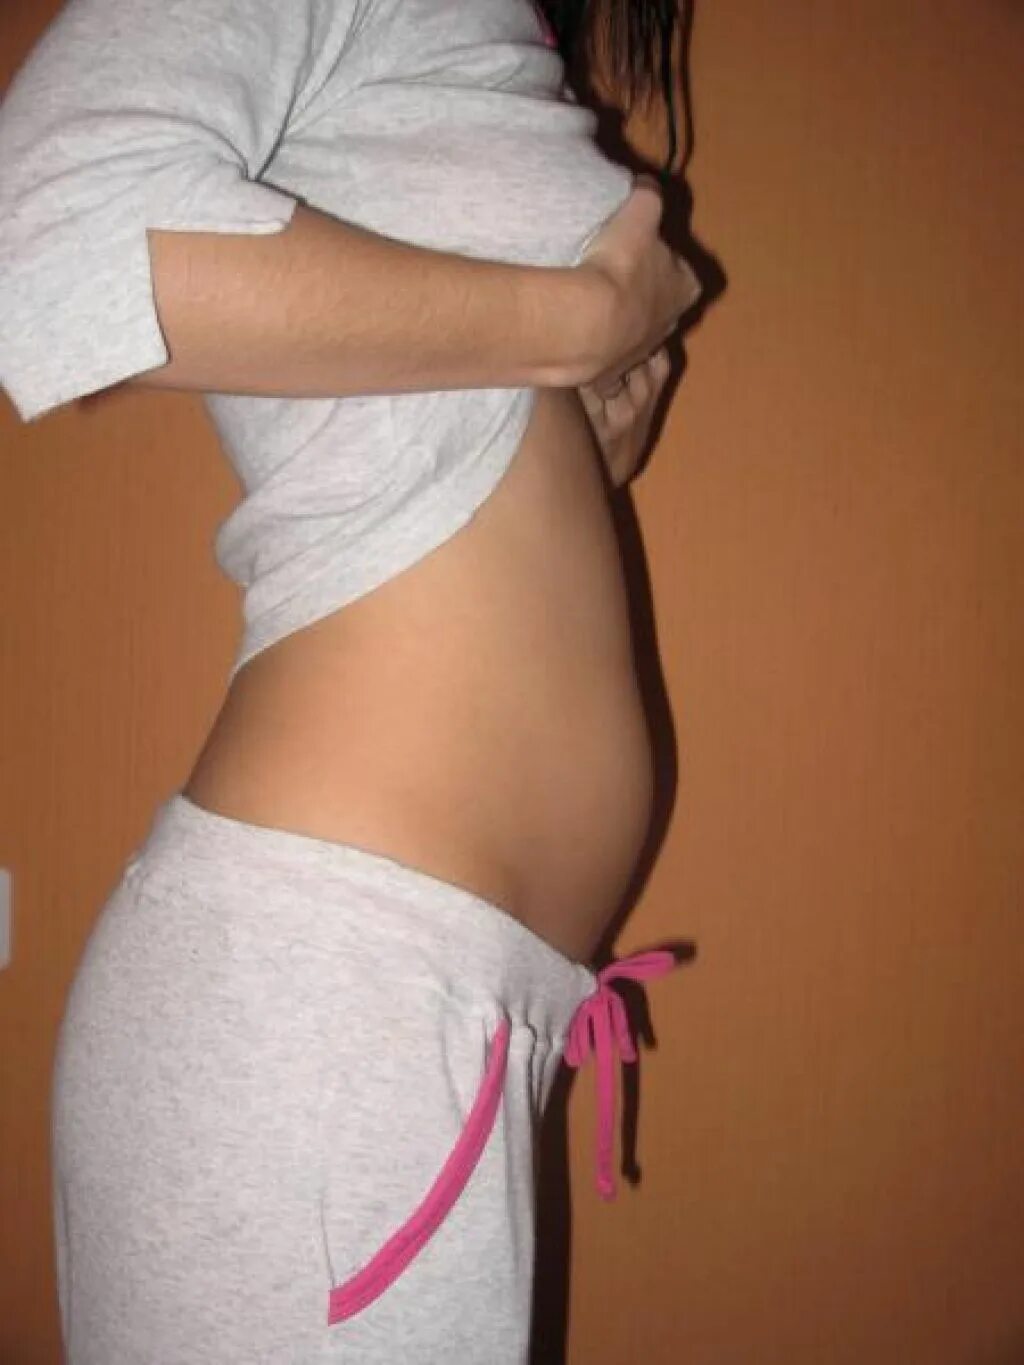 Живот на втором месяце. Живот на 8 неделе беременности. Животик беременной на ранних сроках. Живот на восьмой неделе беременности. Животик беременной в 8 недель.